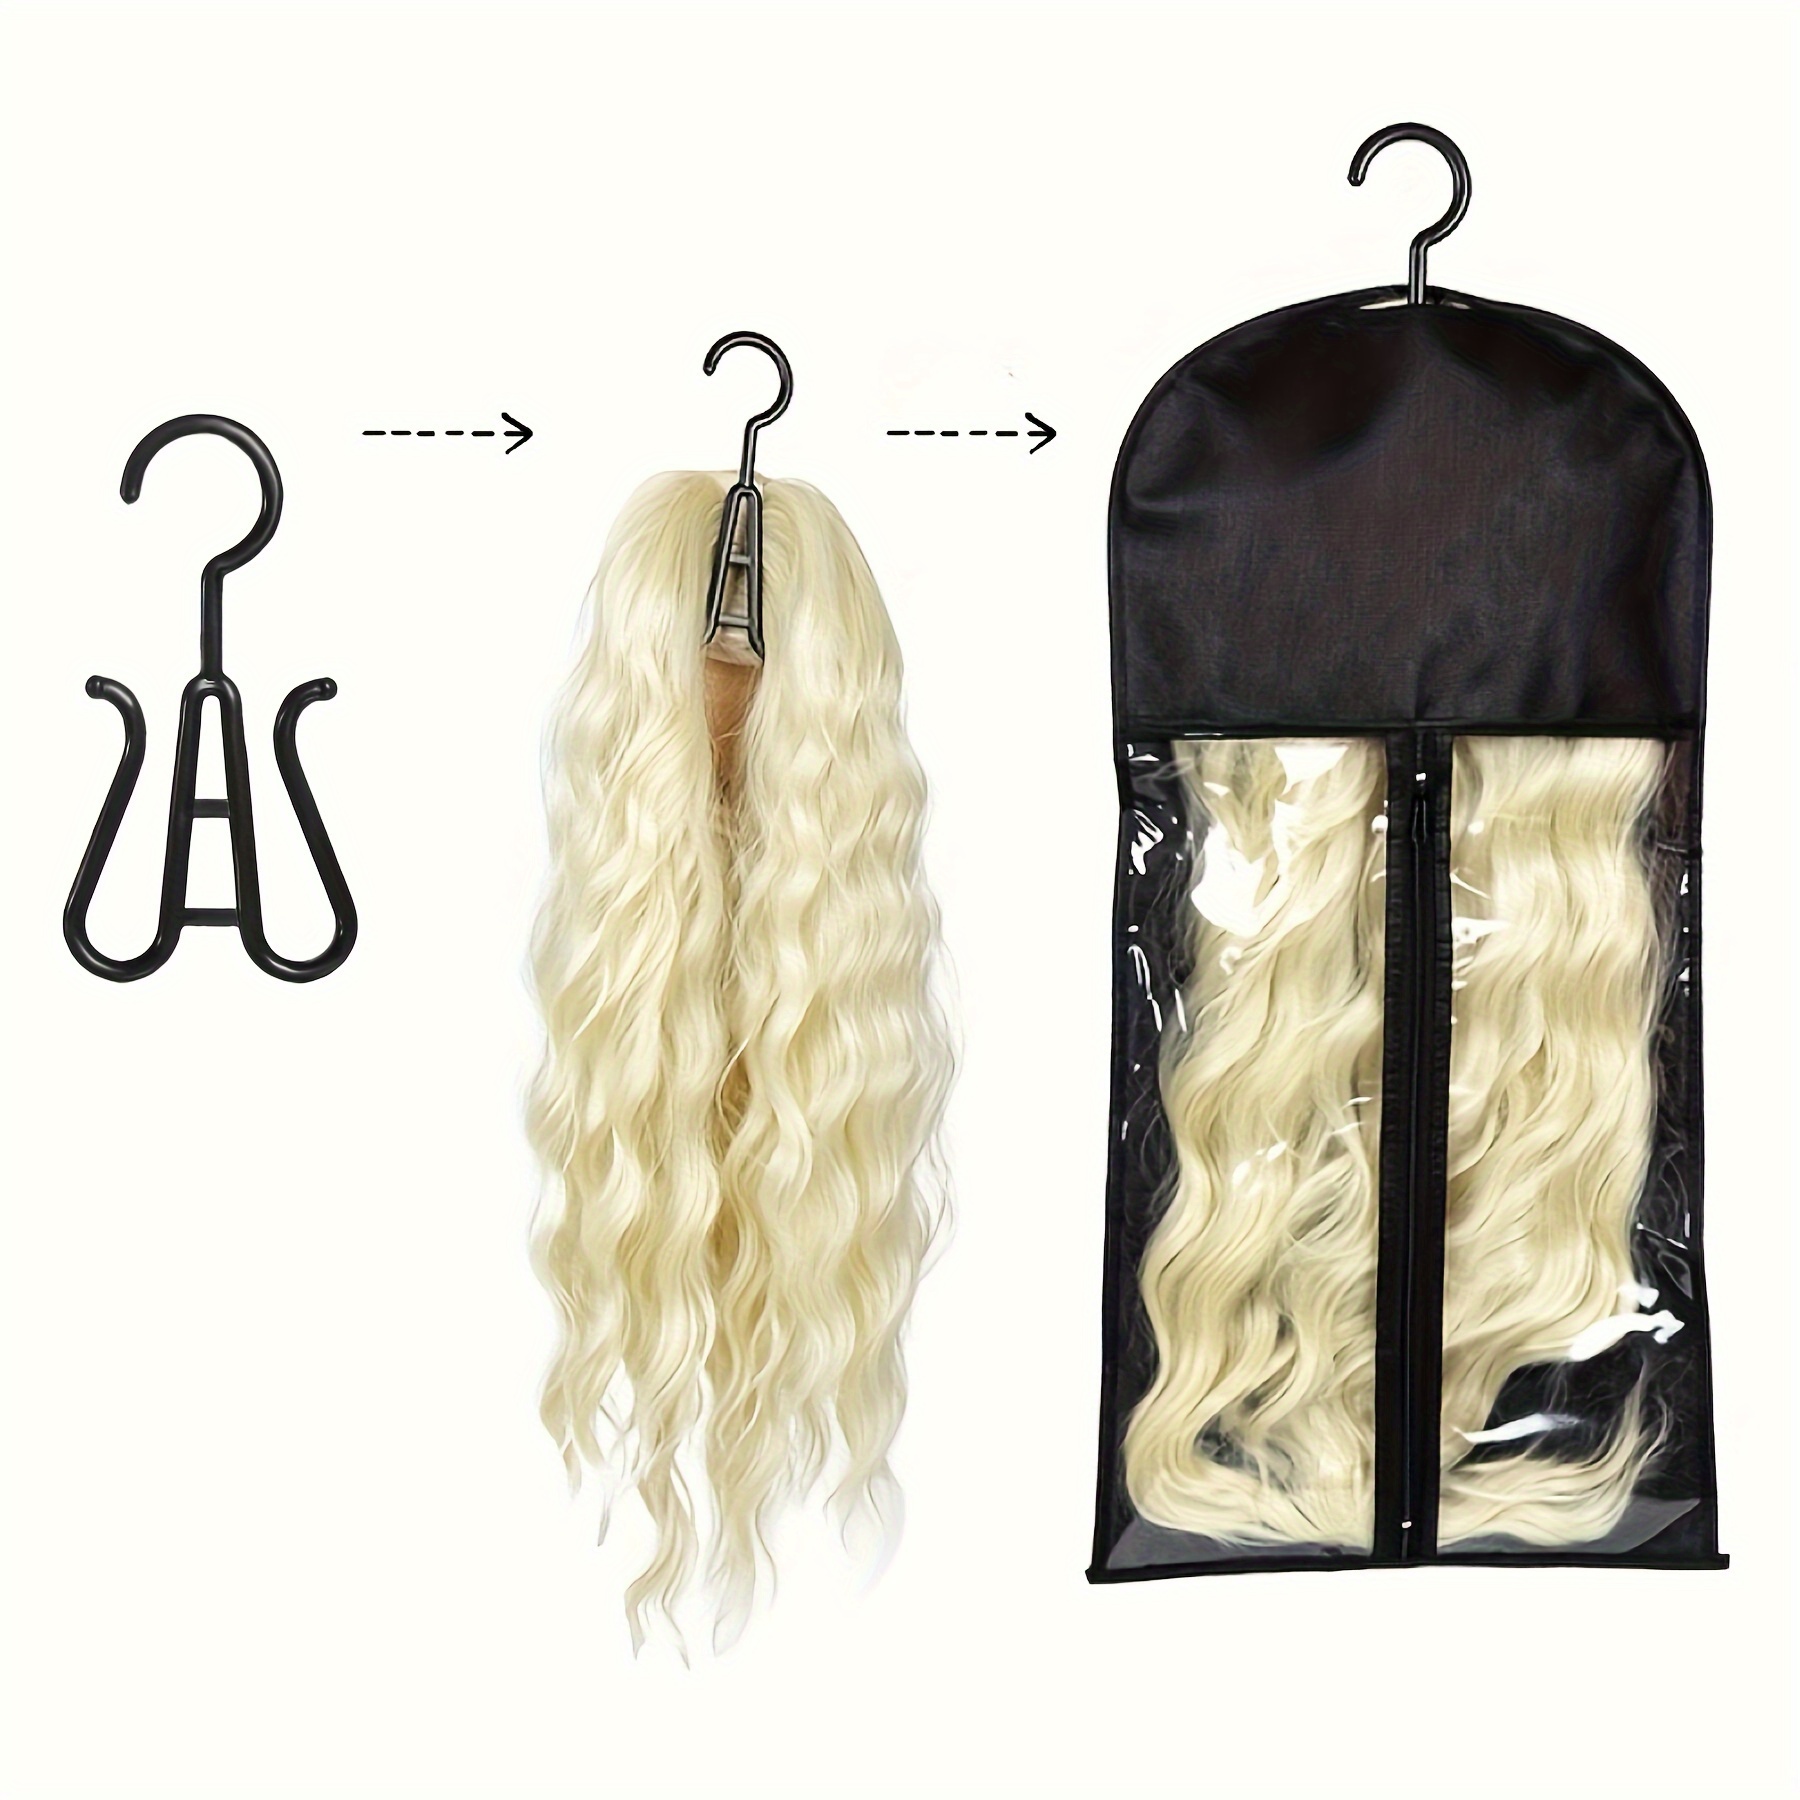 Cheap Hair Extension Holder Acrylic Hair Extension Hanger Portable